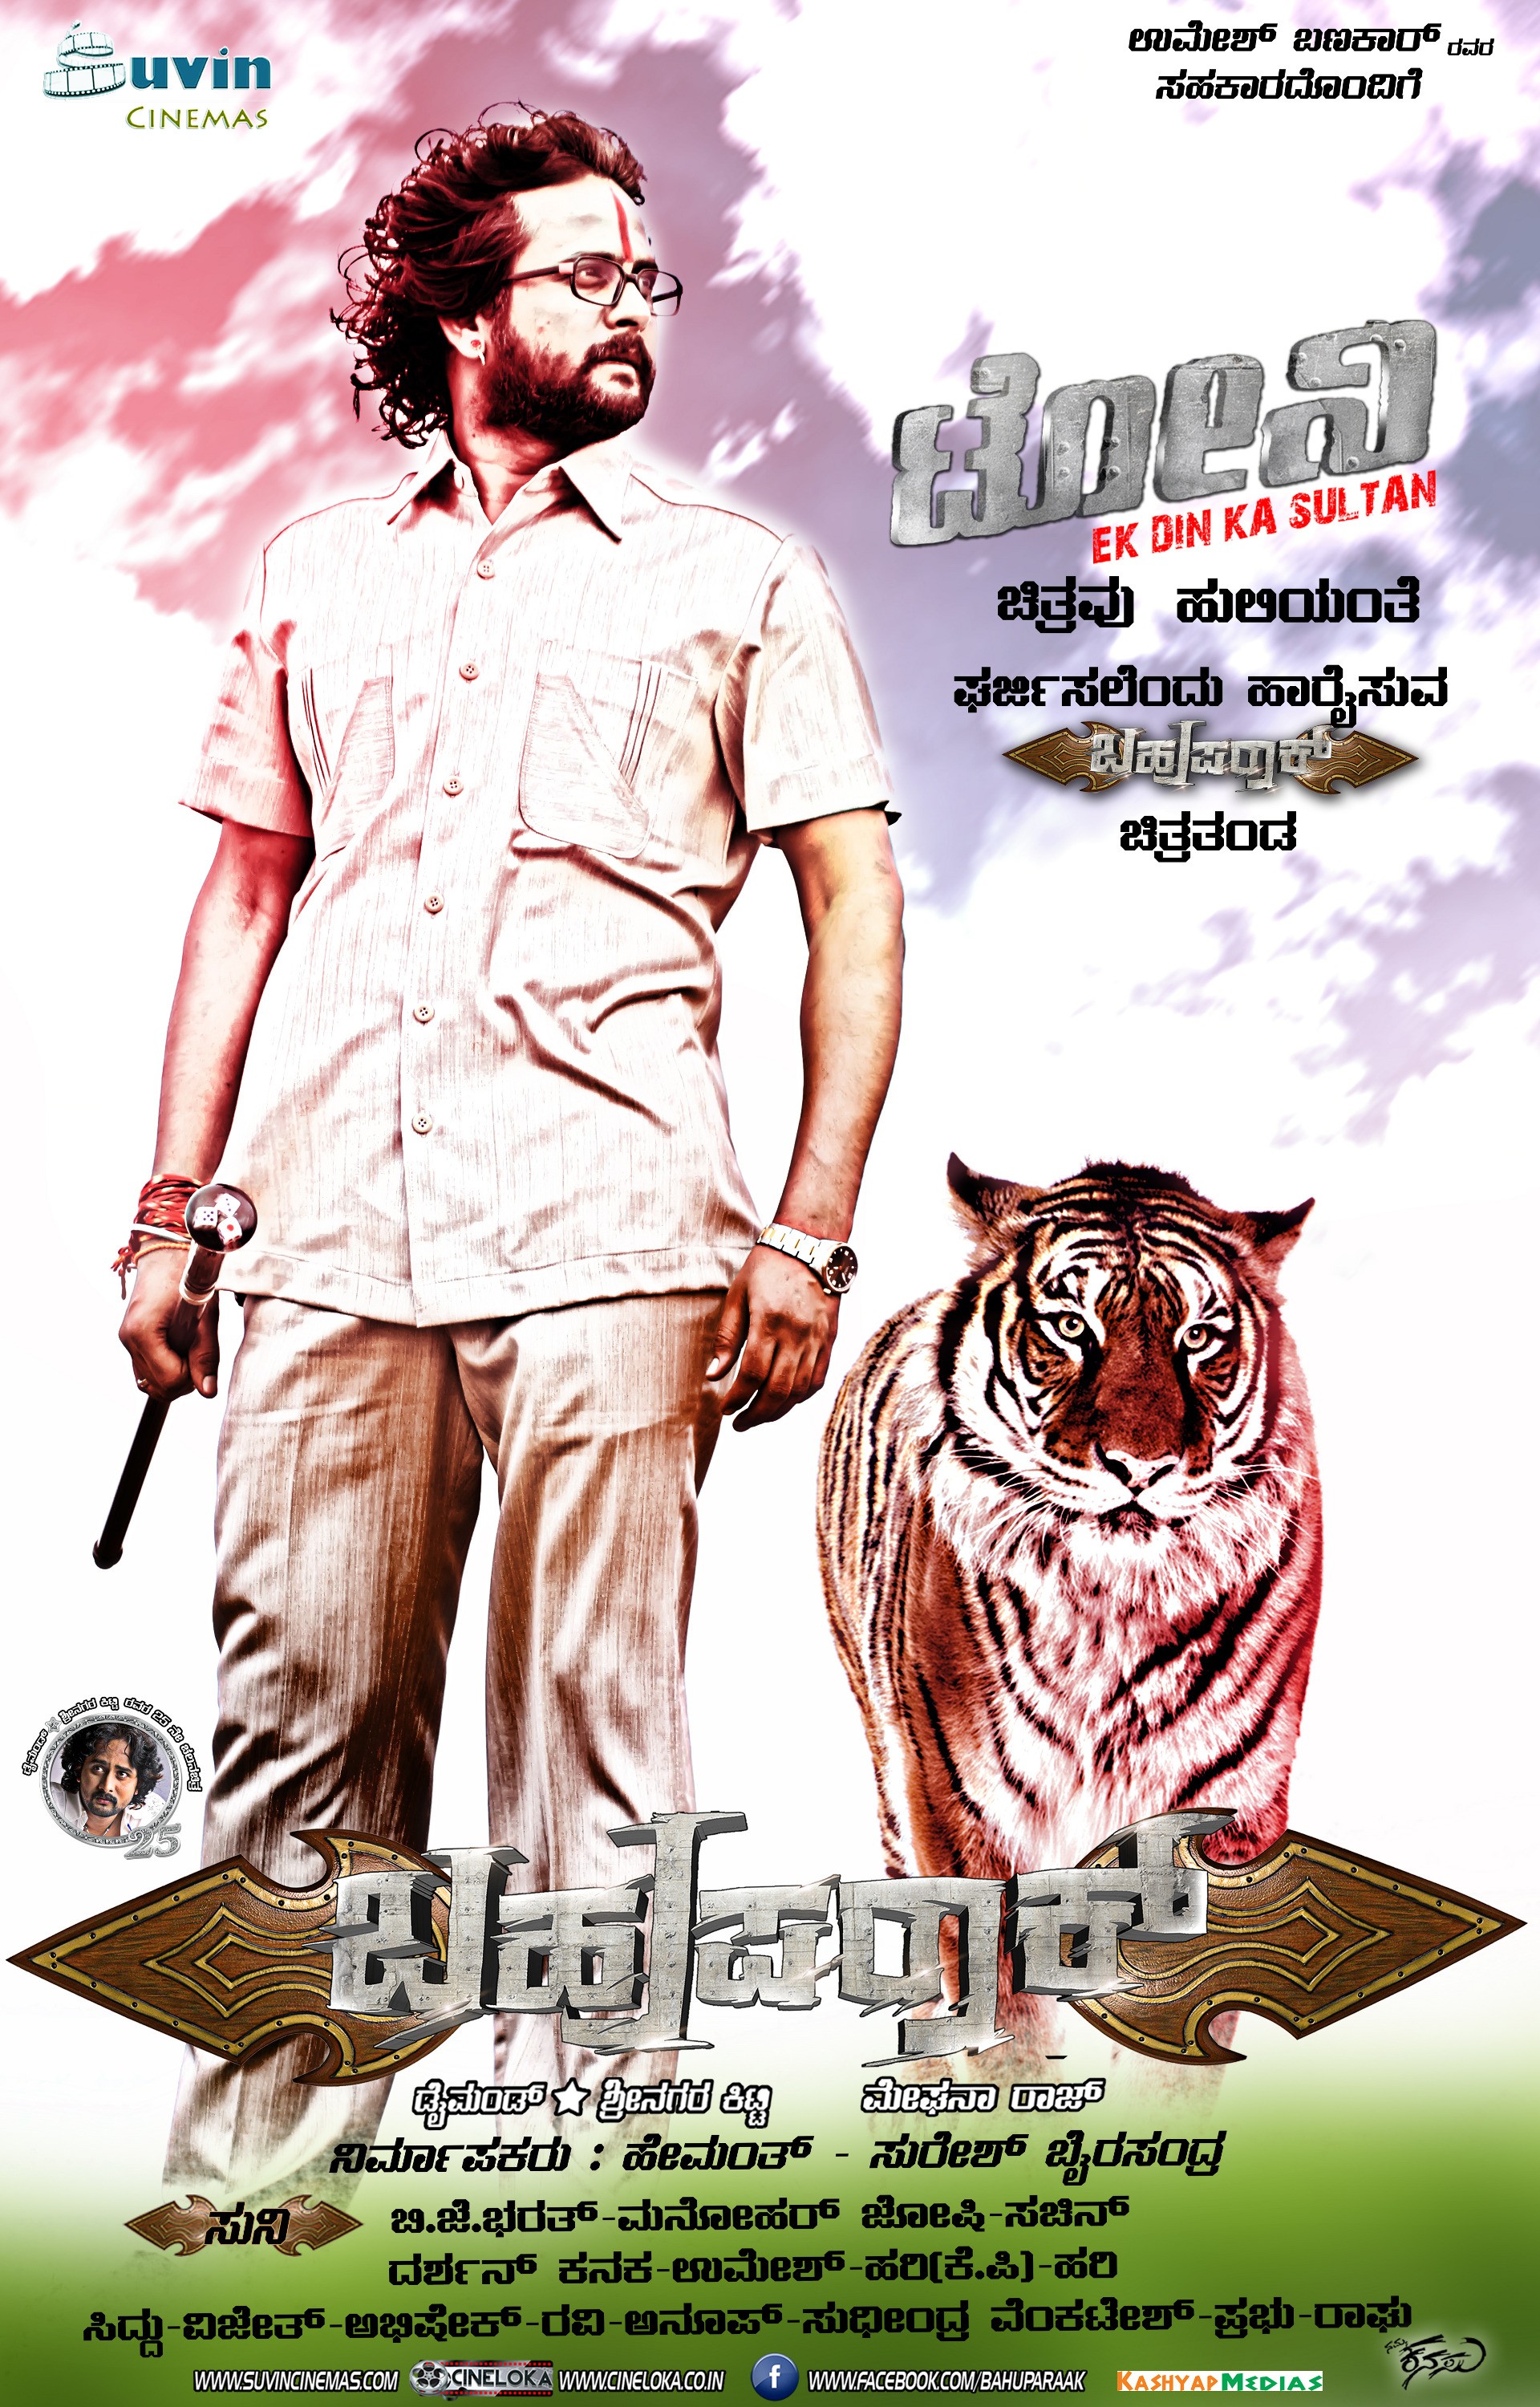 Mega Sized Movie Poster Image for Bahuparak (#12 of 13)